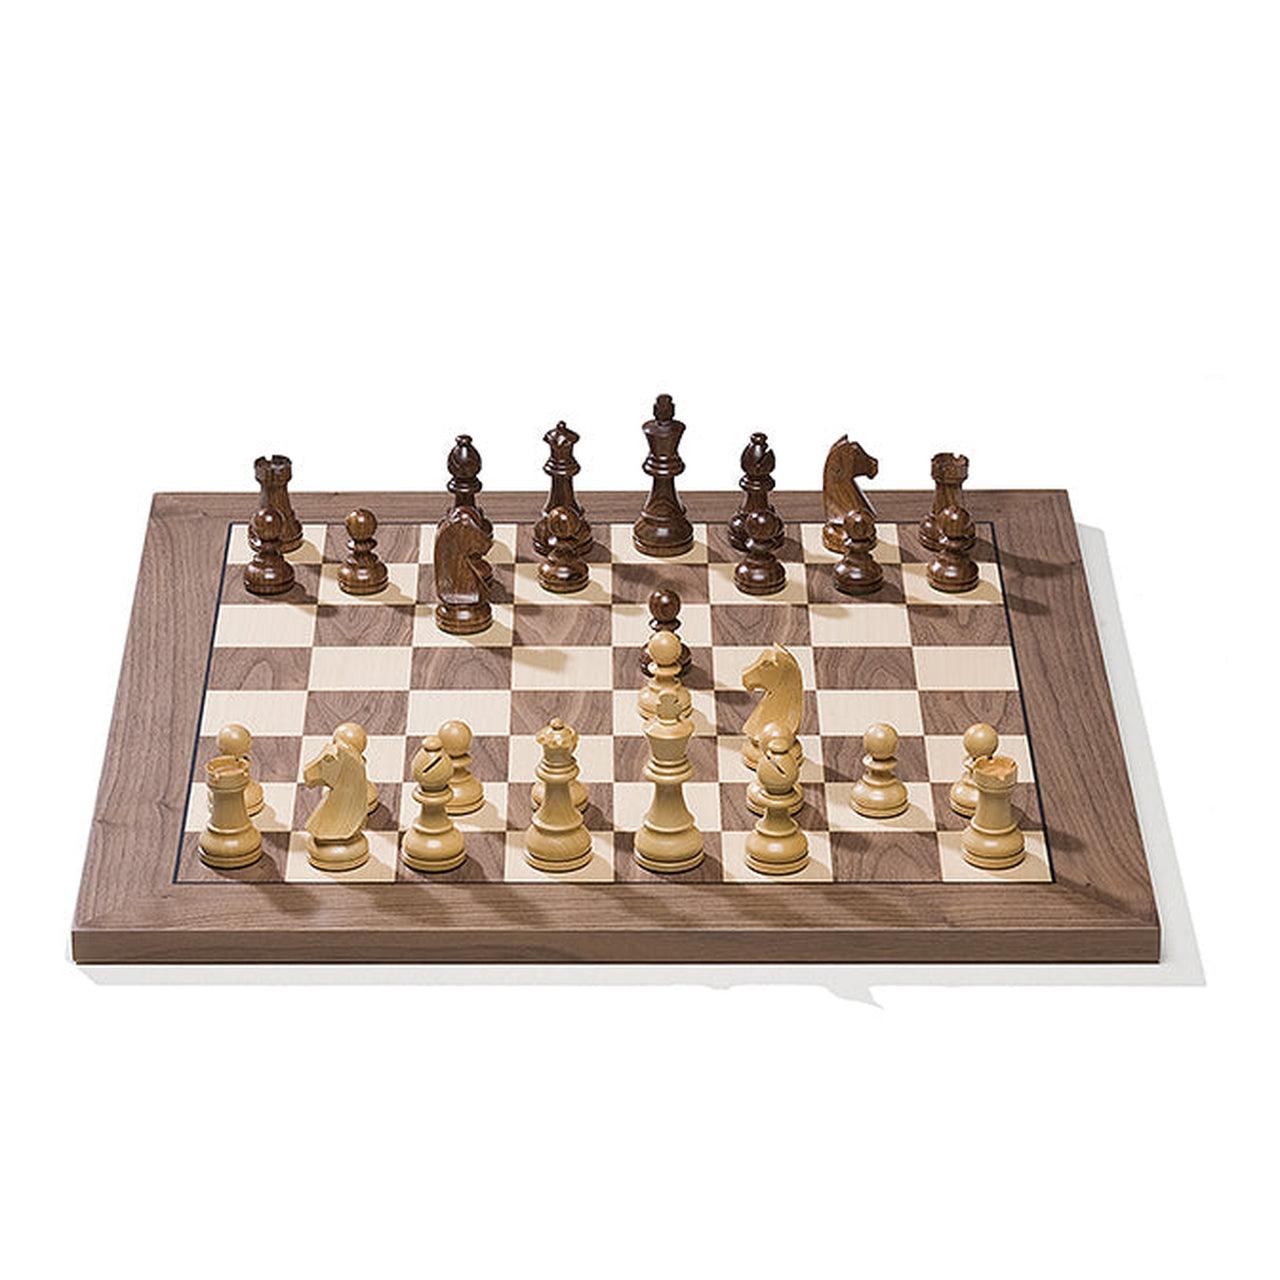 DGT Electronic USB Chess Board + DGT Chess Pieces TIMELESS